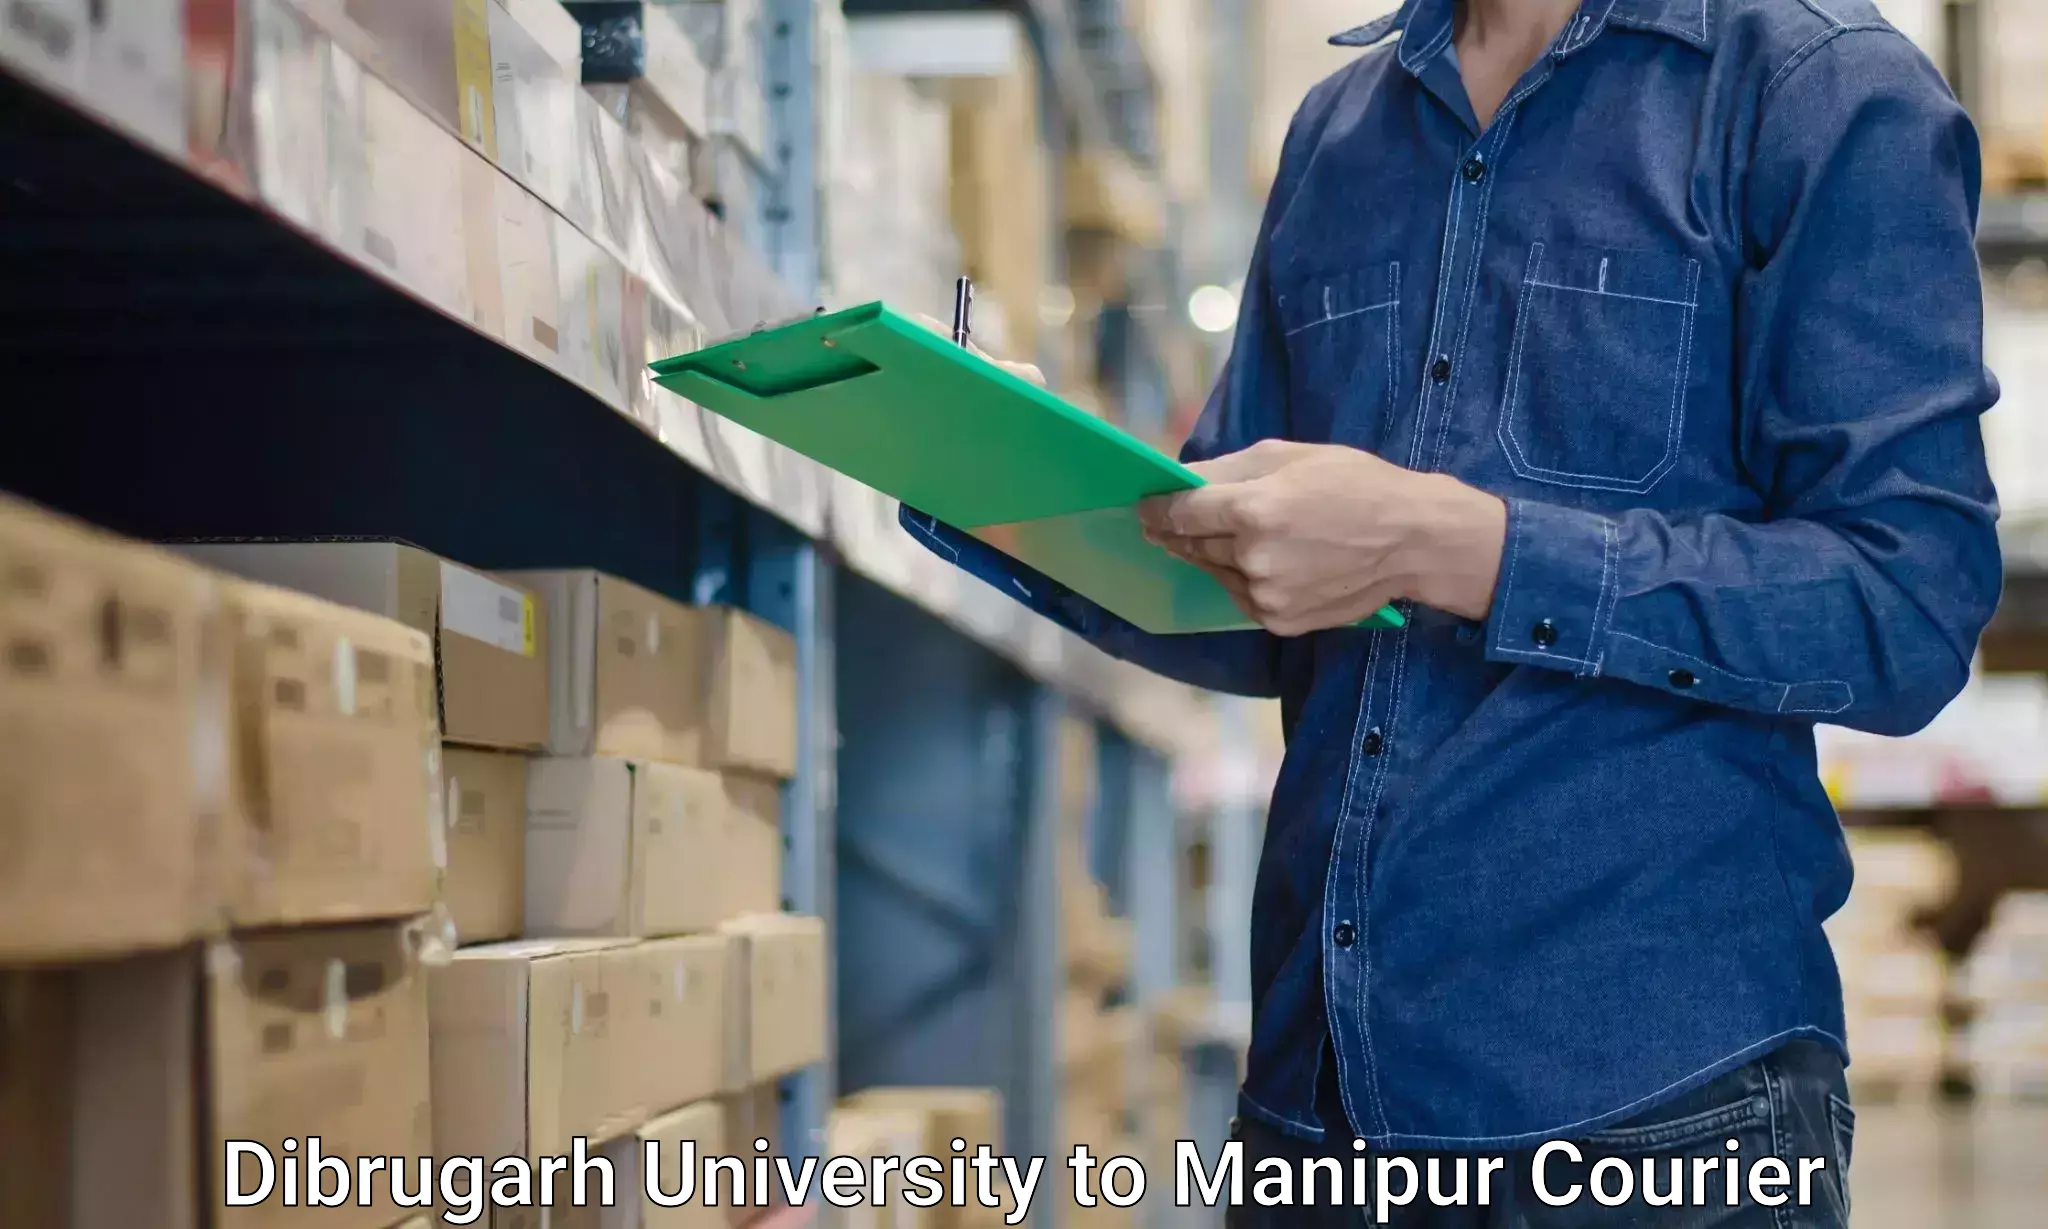 Specialized moving company Dibrugarh University to Churachandpur